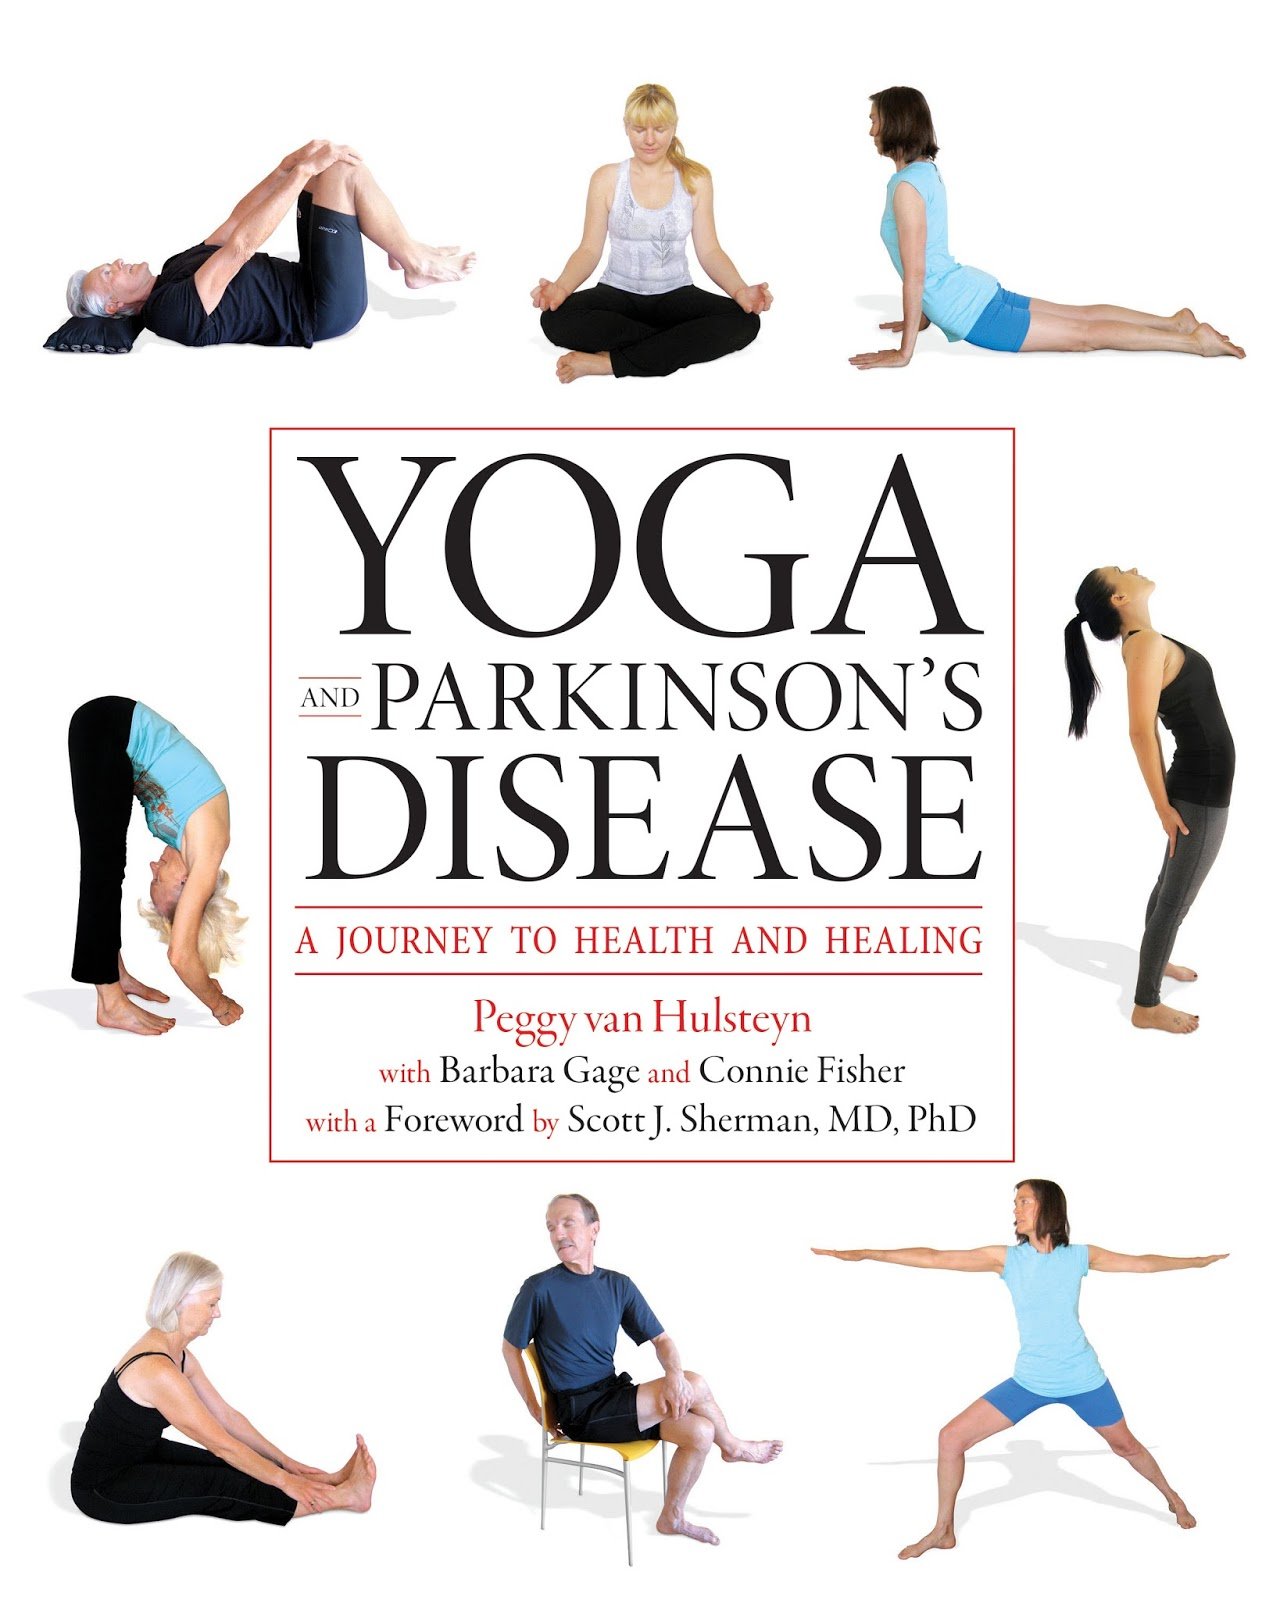 Elaine Benton: Yoga for Parkinson